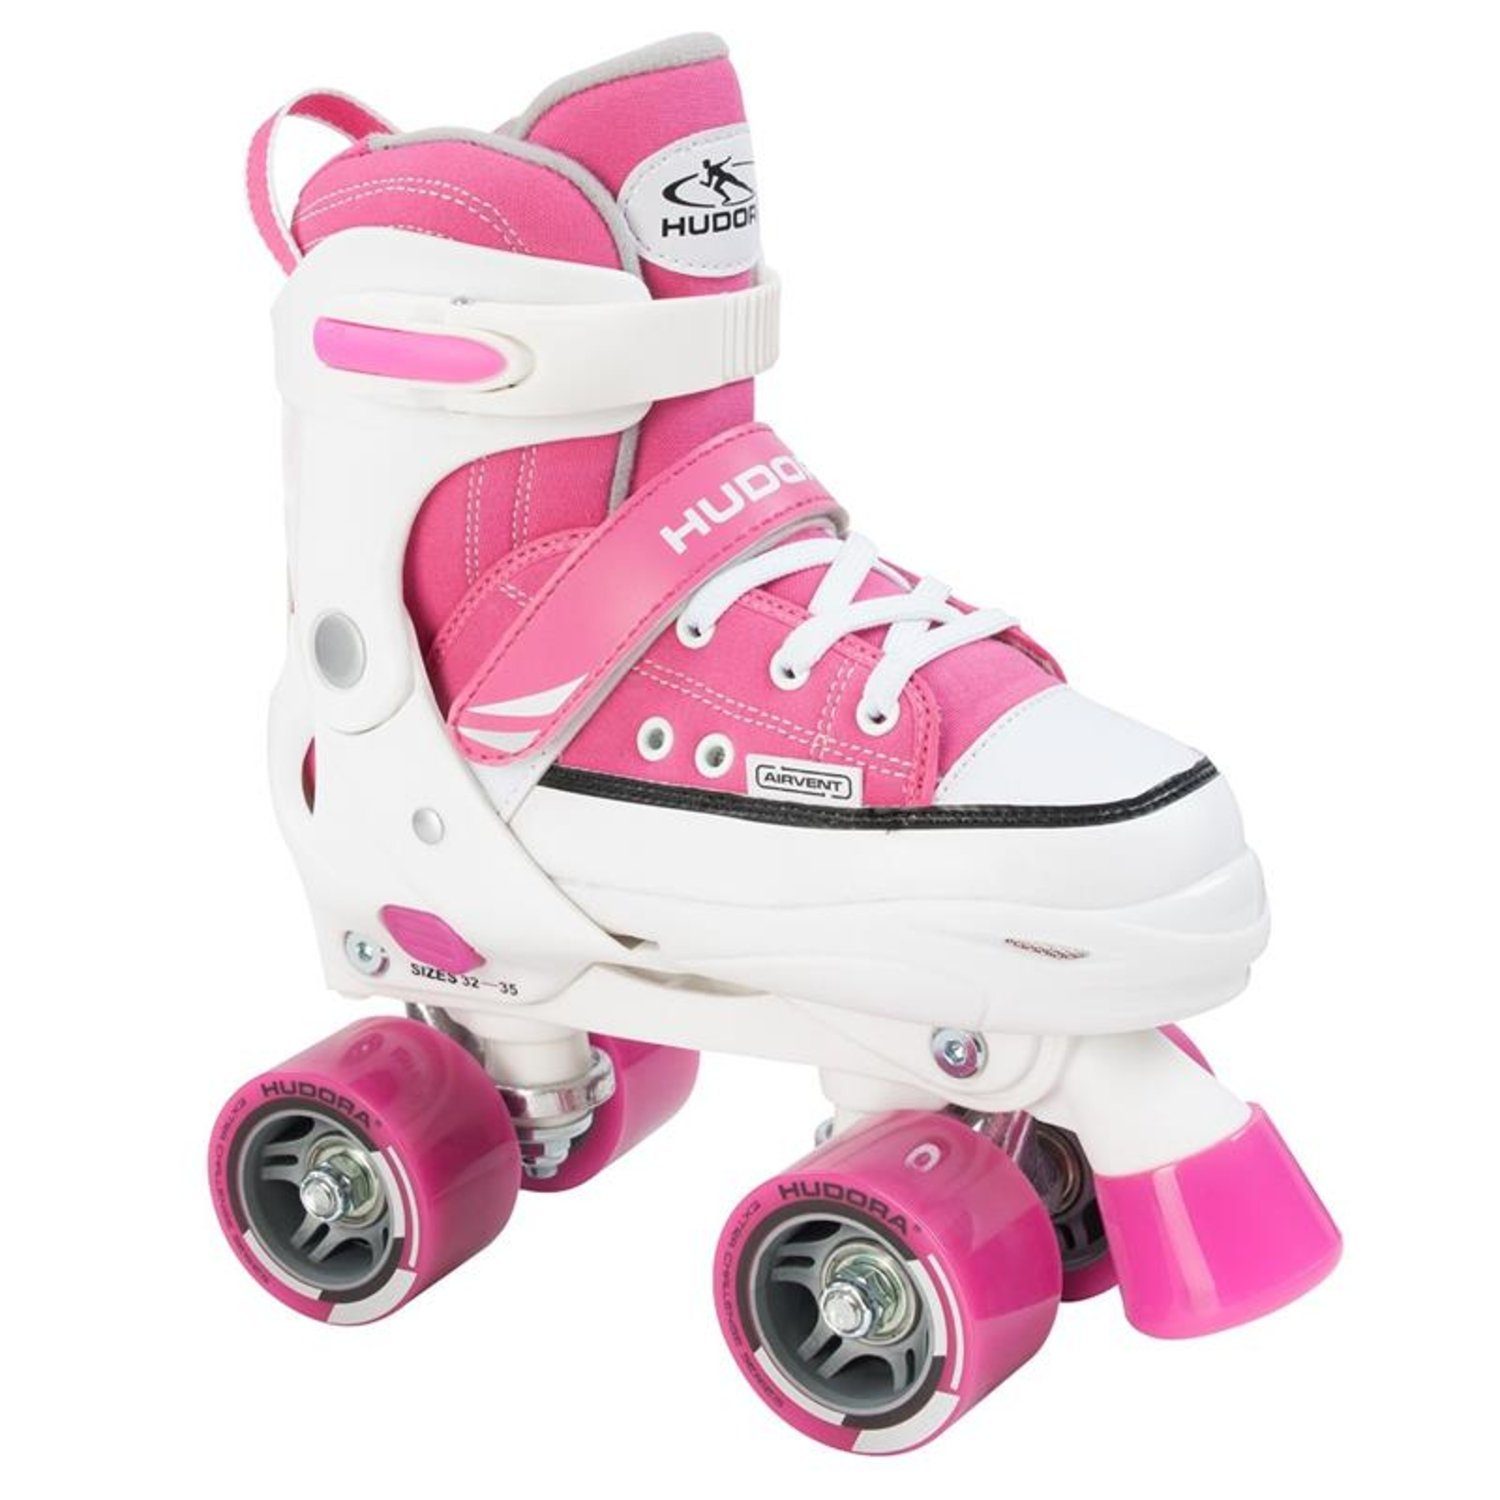 Hudora Inlineskates 22033 Roller Skate, pink, verstellbar Gr. 28-31 | Inlineskates